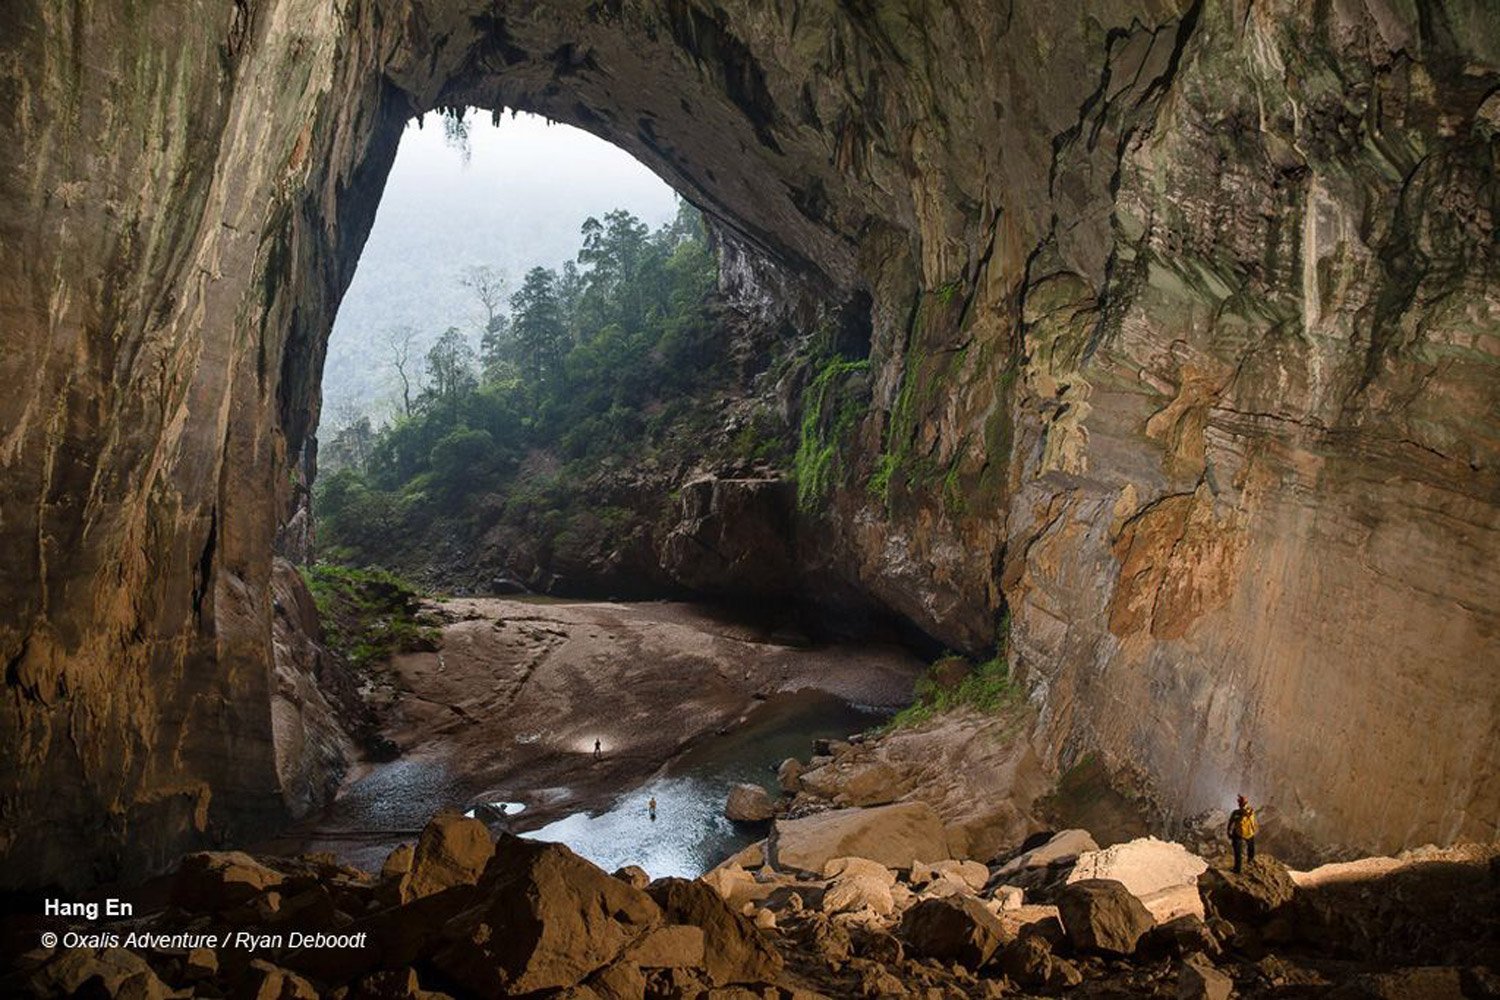 Hang En, one of the biggest cave located in Phong Nha - Ke Bang National Park